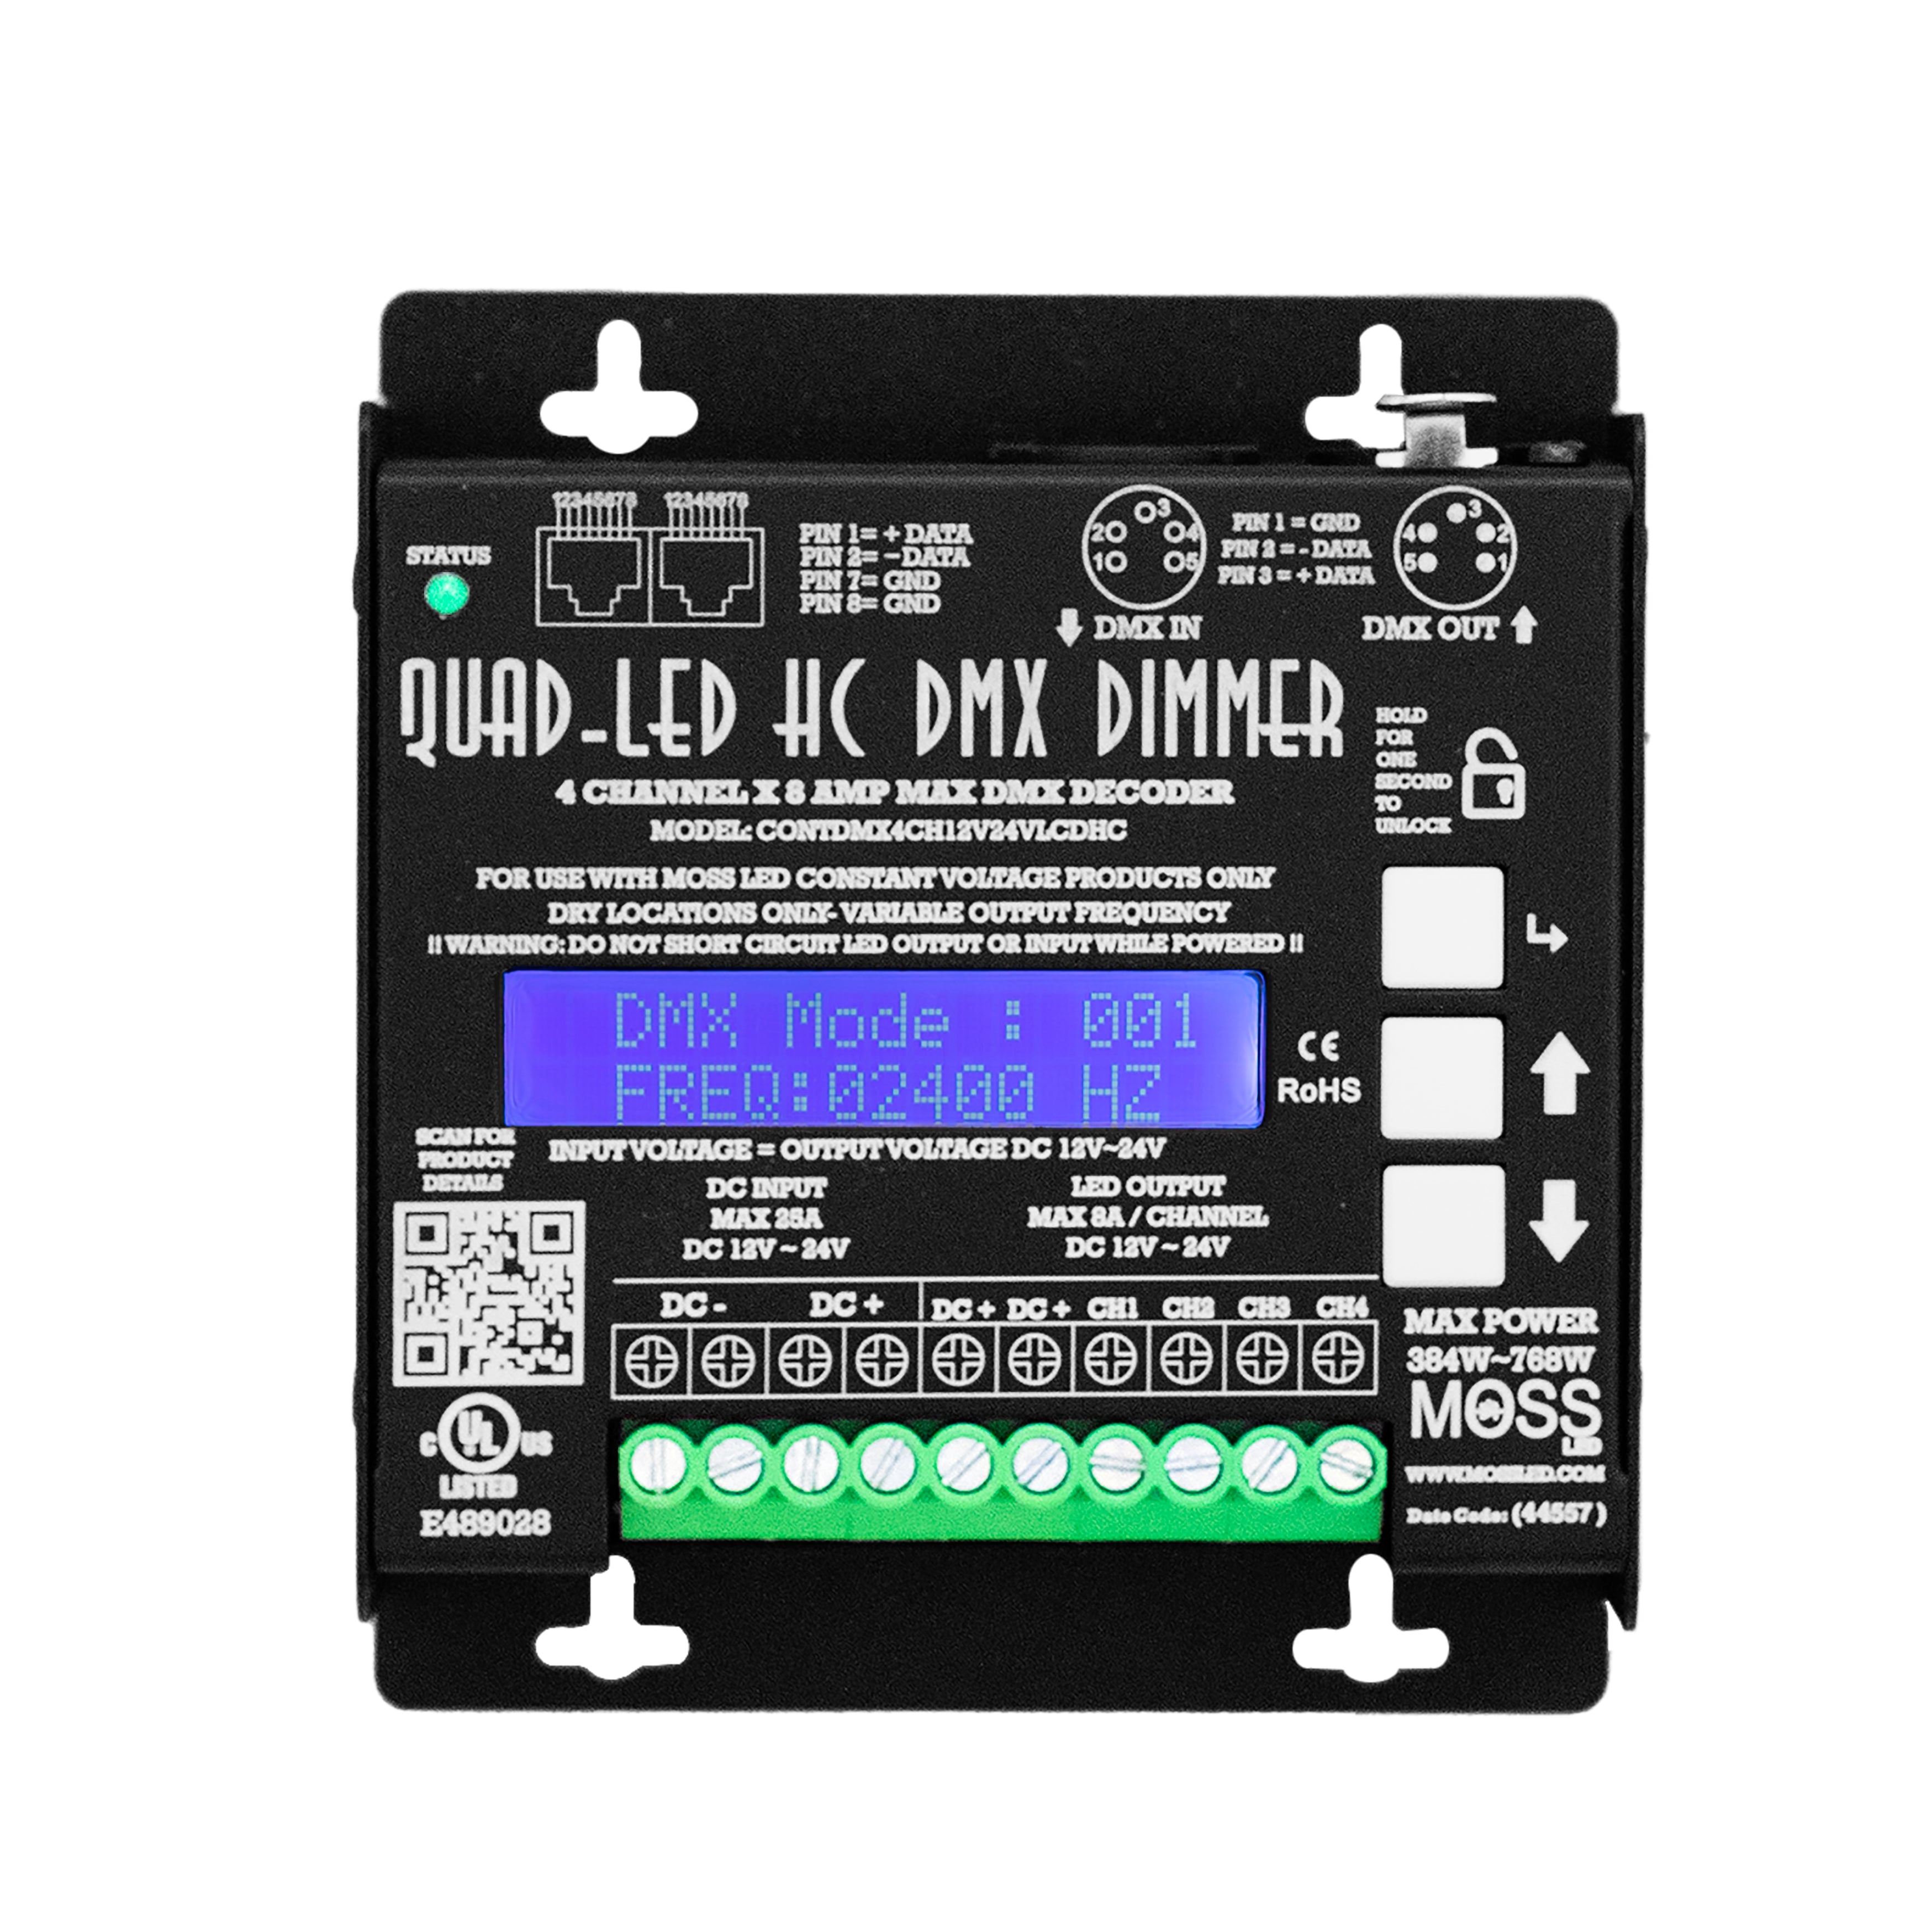 Quad-LED High Current DMX - 4 Channel Dimmer